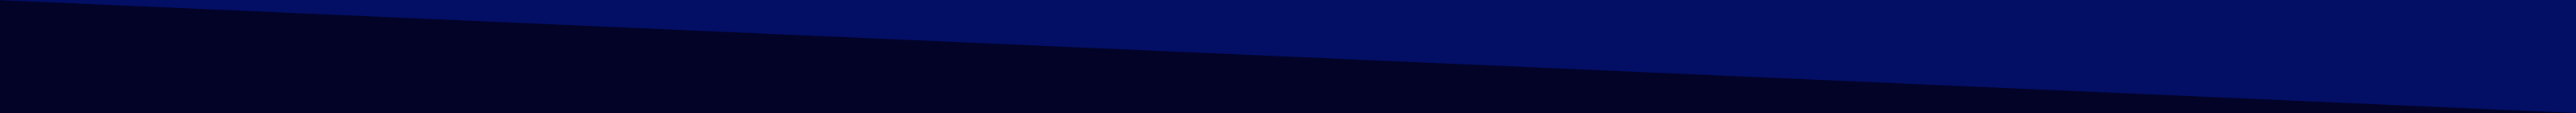 Dark blue to light blue page divider